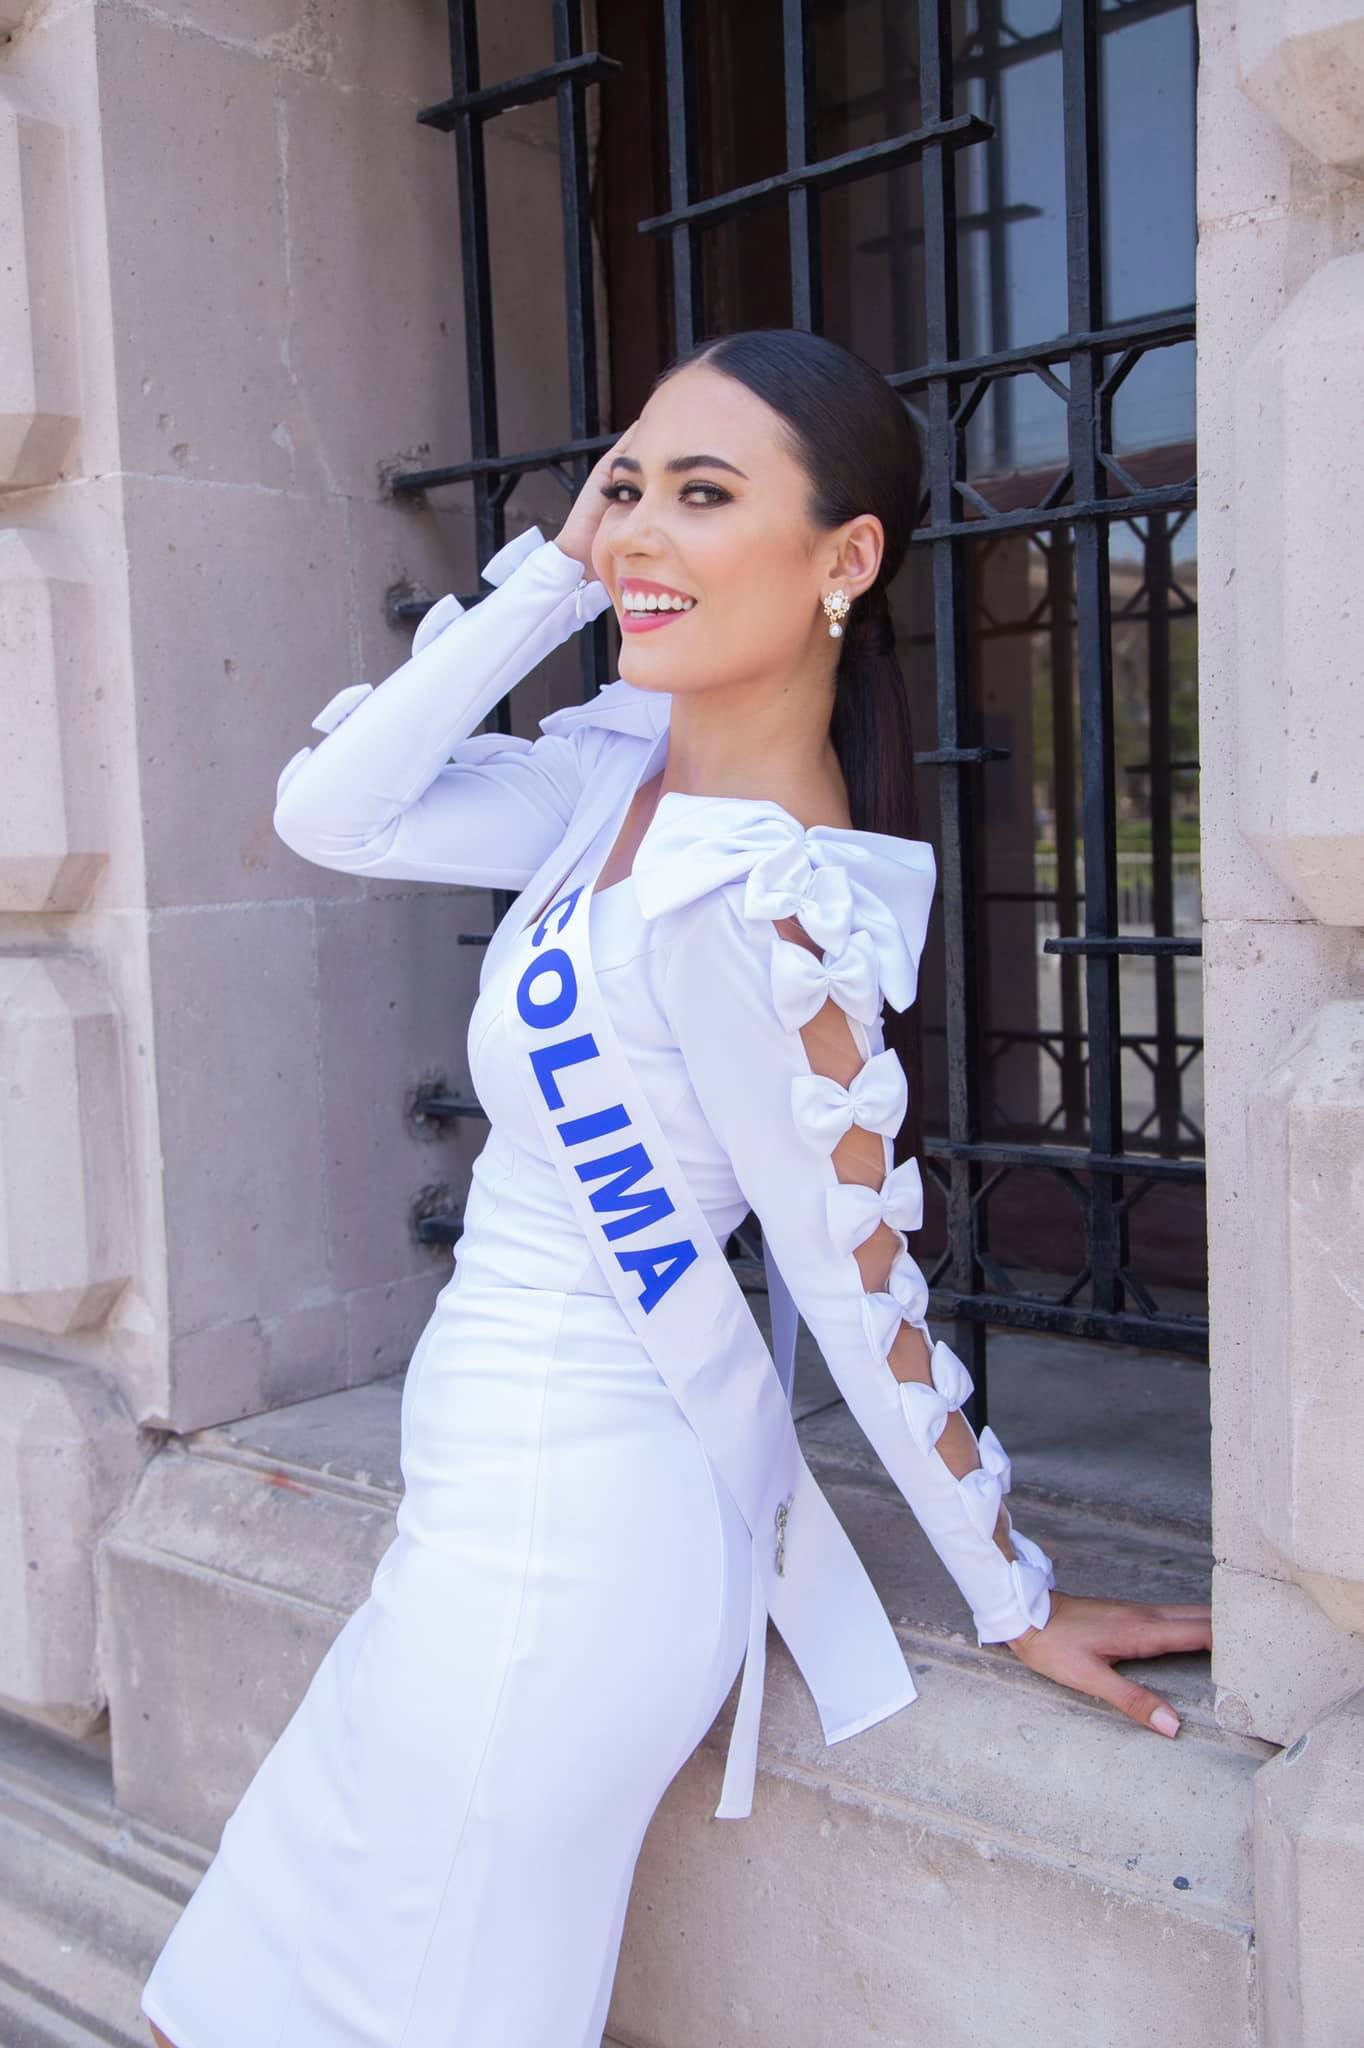 photo shoots de candidatas a miss mexico 2021. - Página 3 OFNmG4